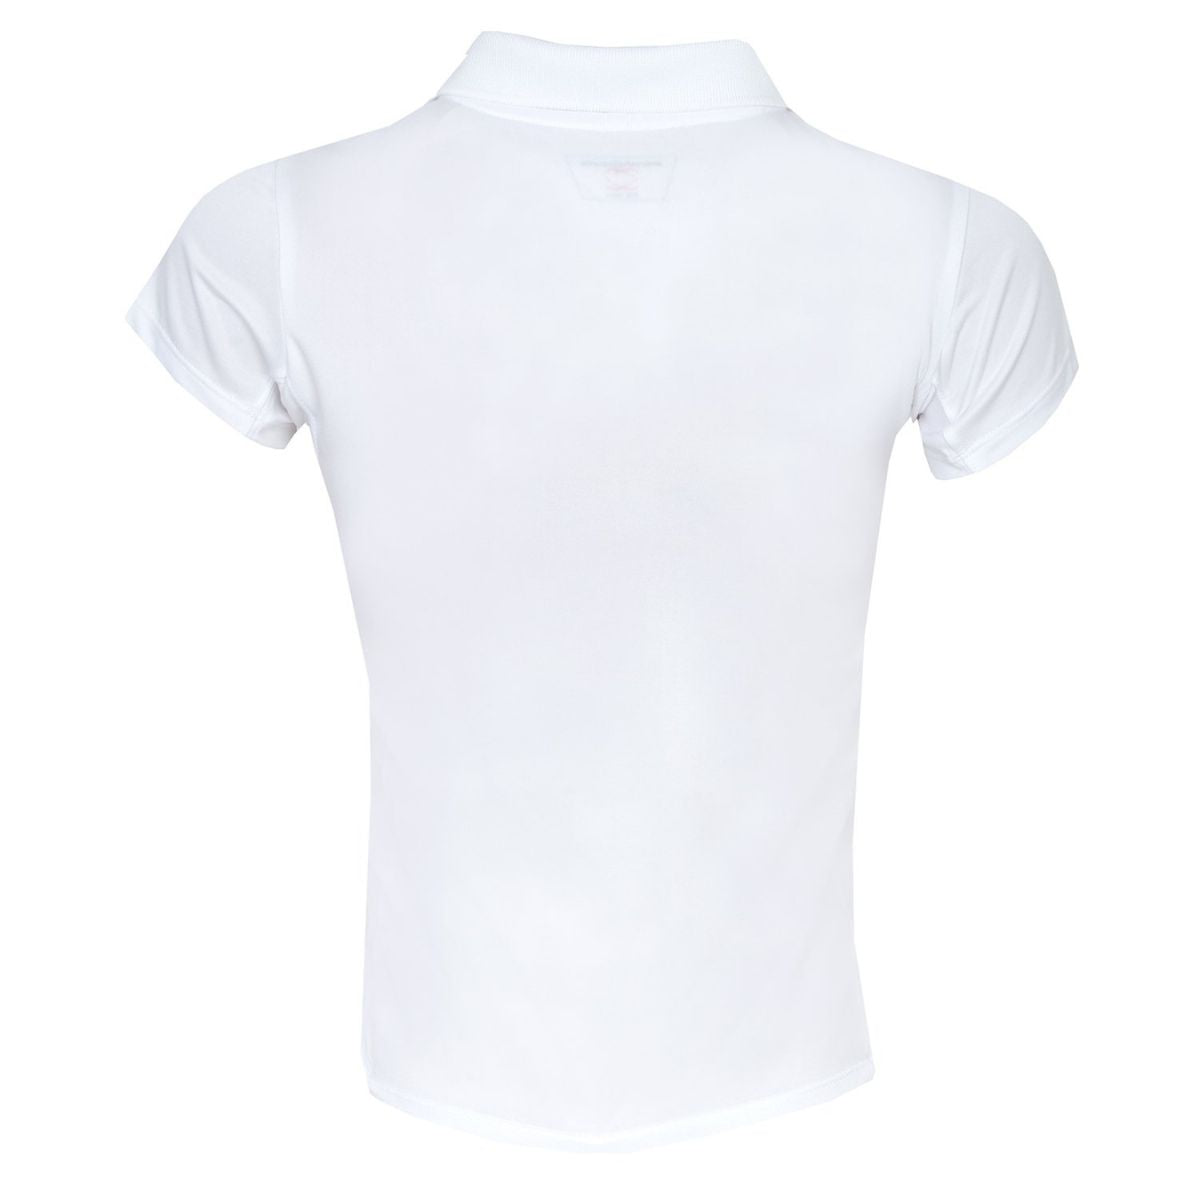 Girls Golf Polo Shirt - White